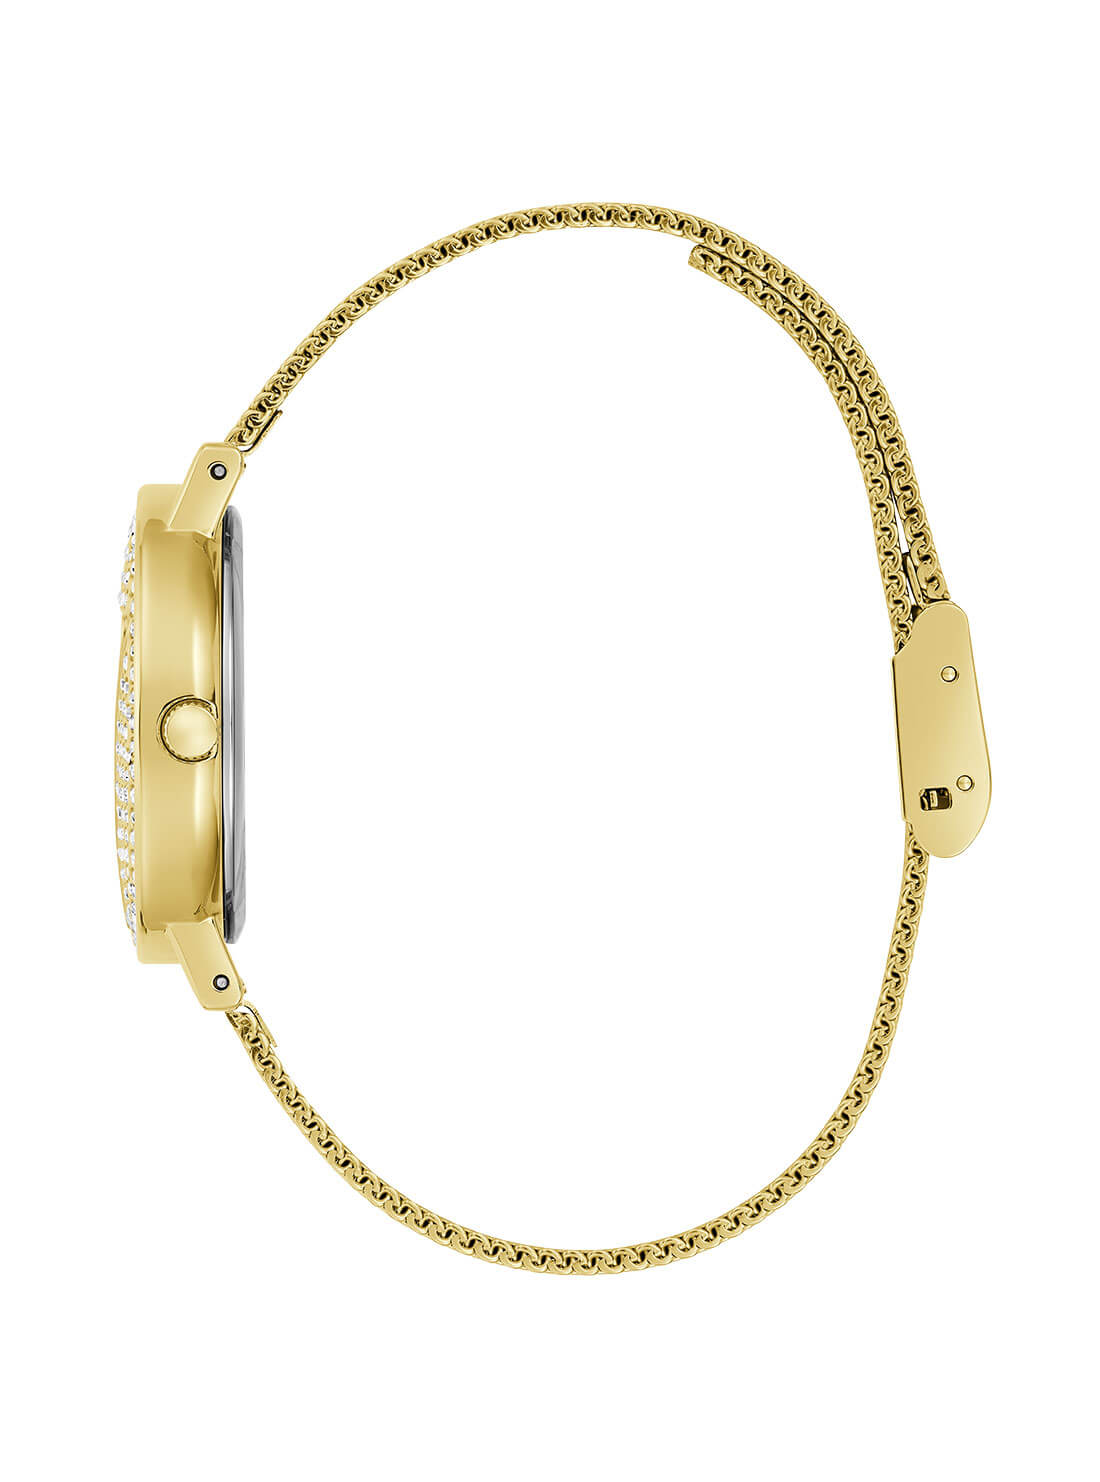 Gold Mini Iconic Glitz Mesh Watch | GUESS Women's Watches | side view alt